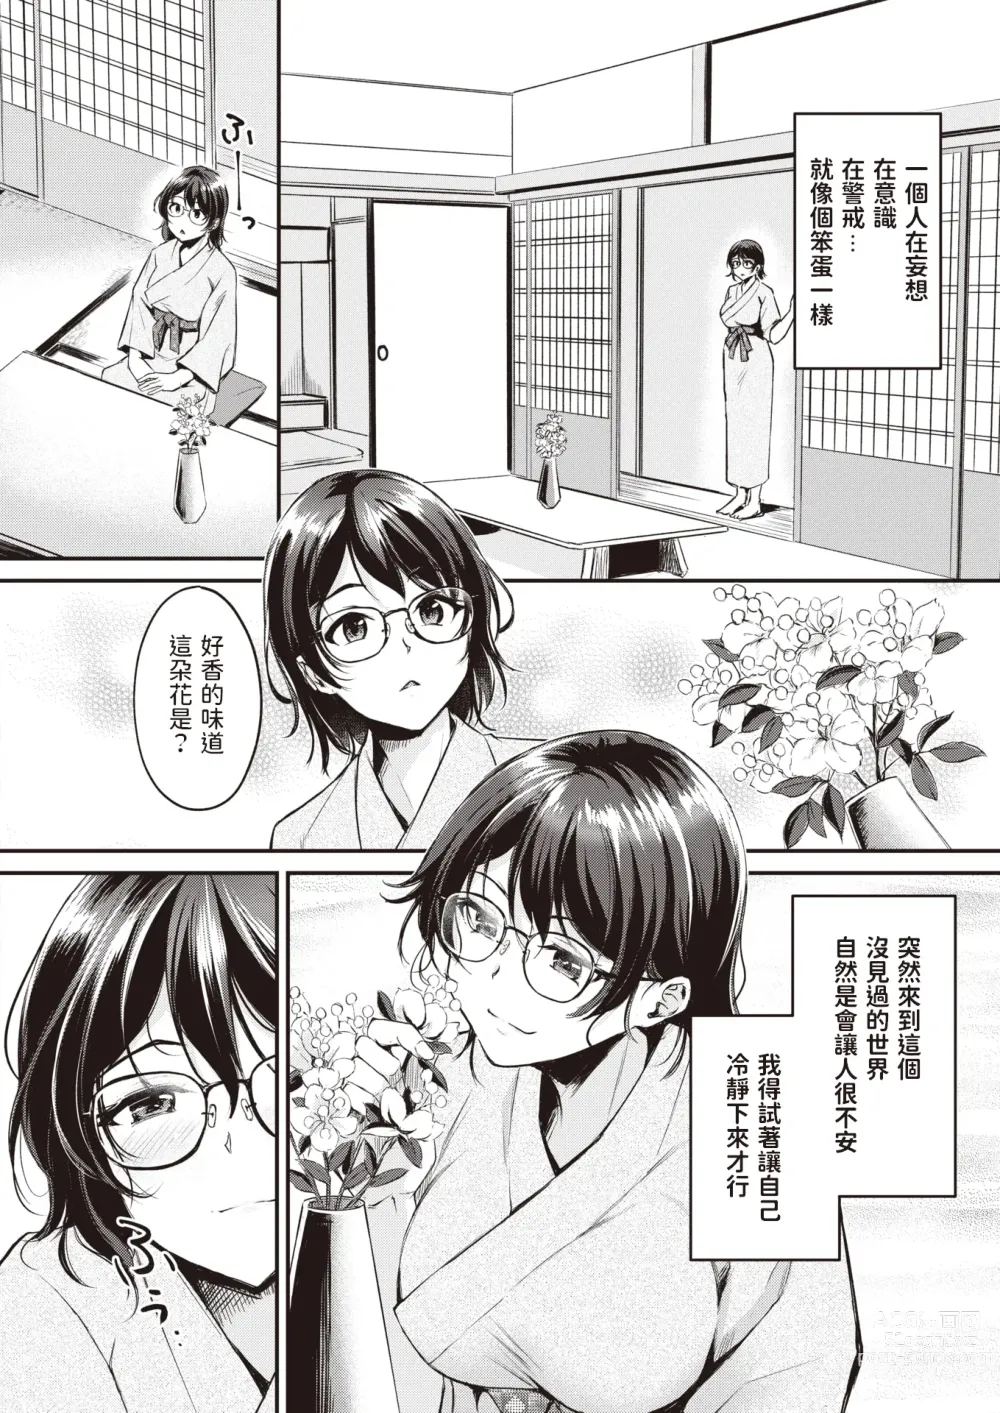 Page 6 of manga Kemomimi no Senjutsushi ~Aratana Mayoihito~